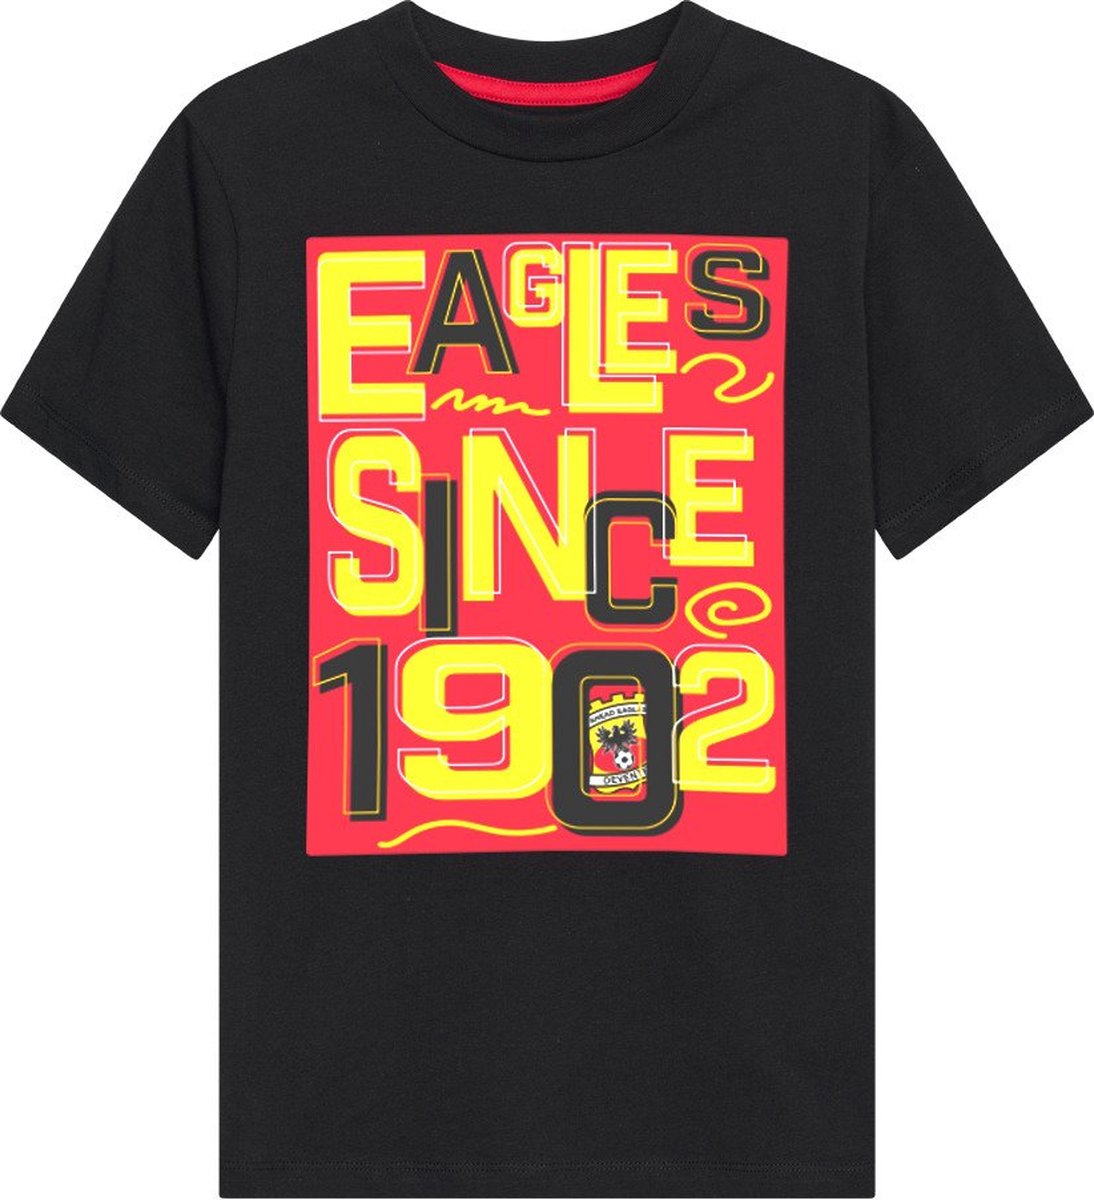 Eagles kids T-shirt - Voetbalshirts kinderen - Go Ahead Eagles - maat 164